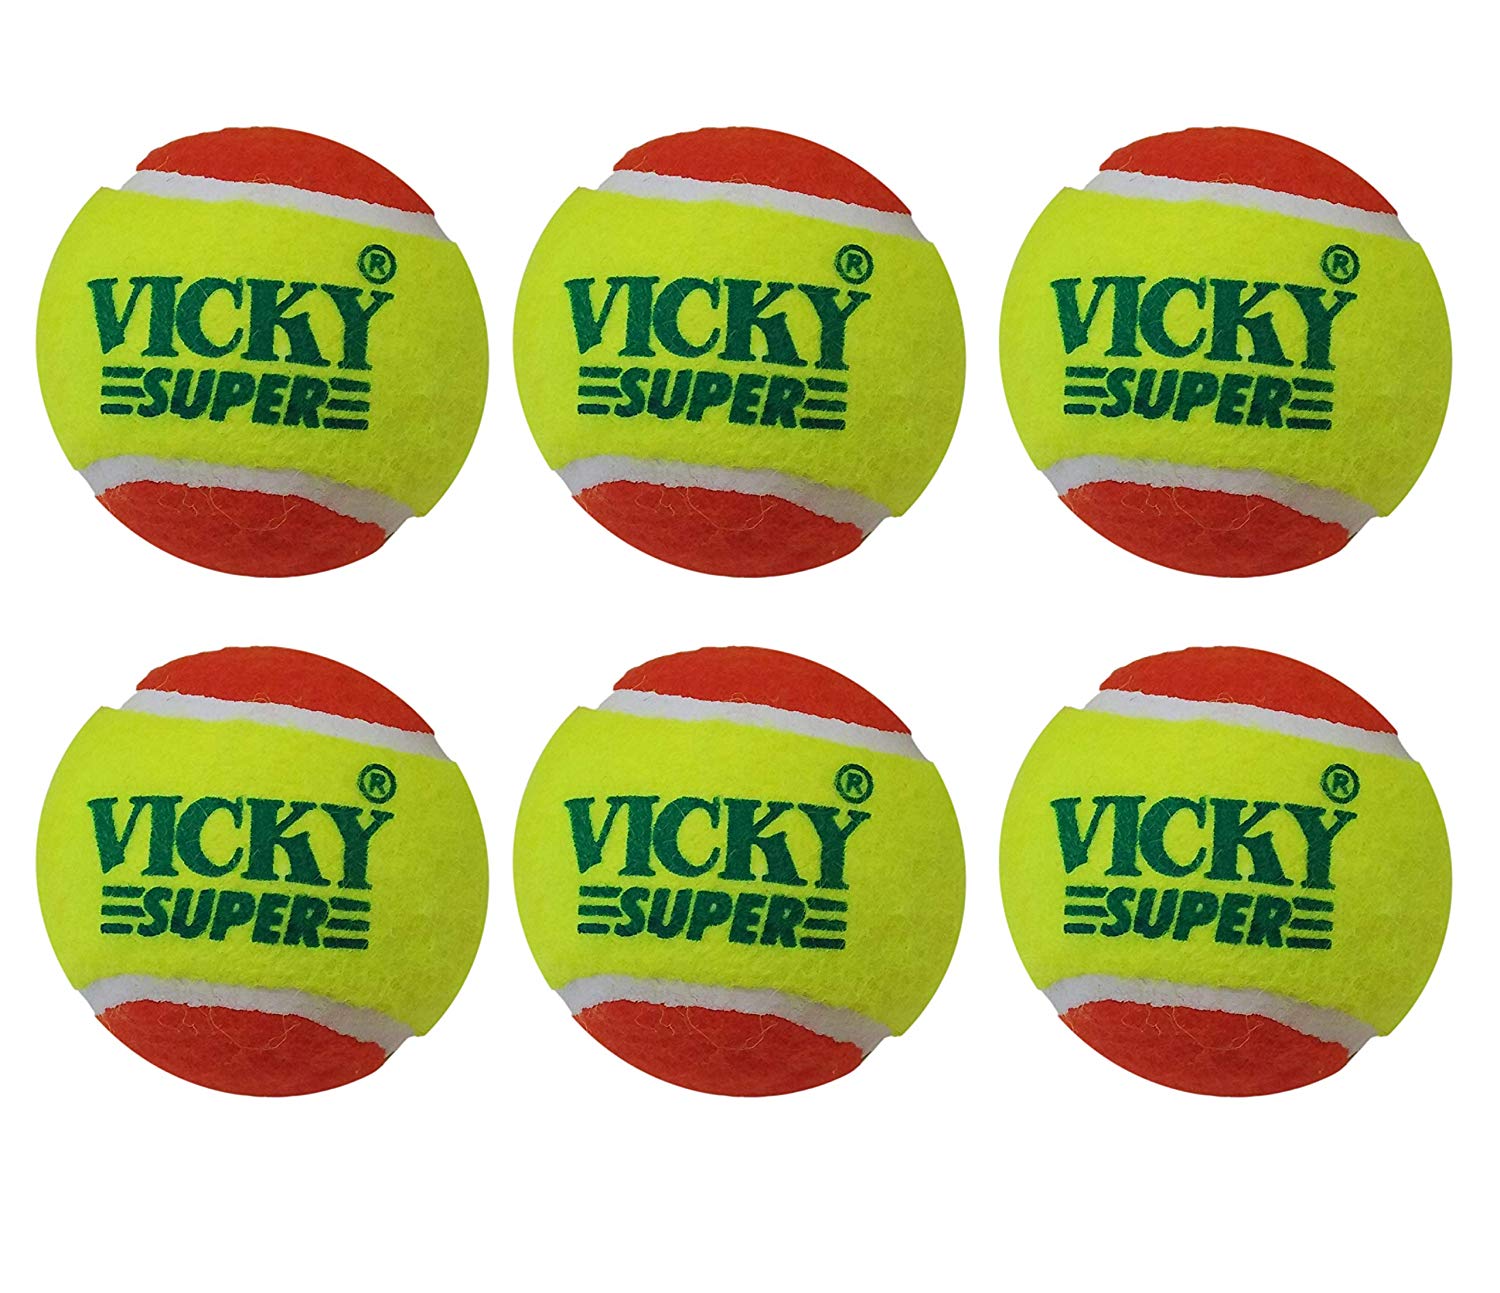 Vicky Cricket Tennis Ball - Super (Heavy), Double Colour - Best Price online Prokicksports.com